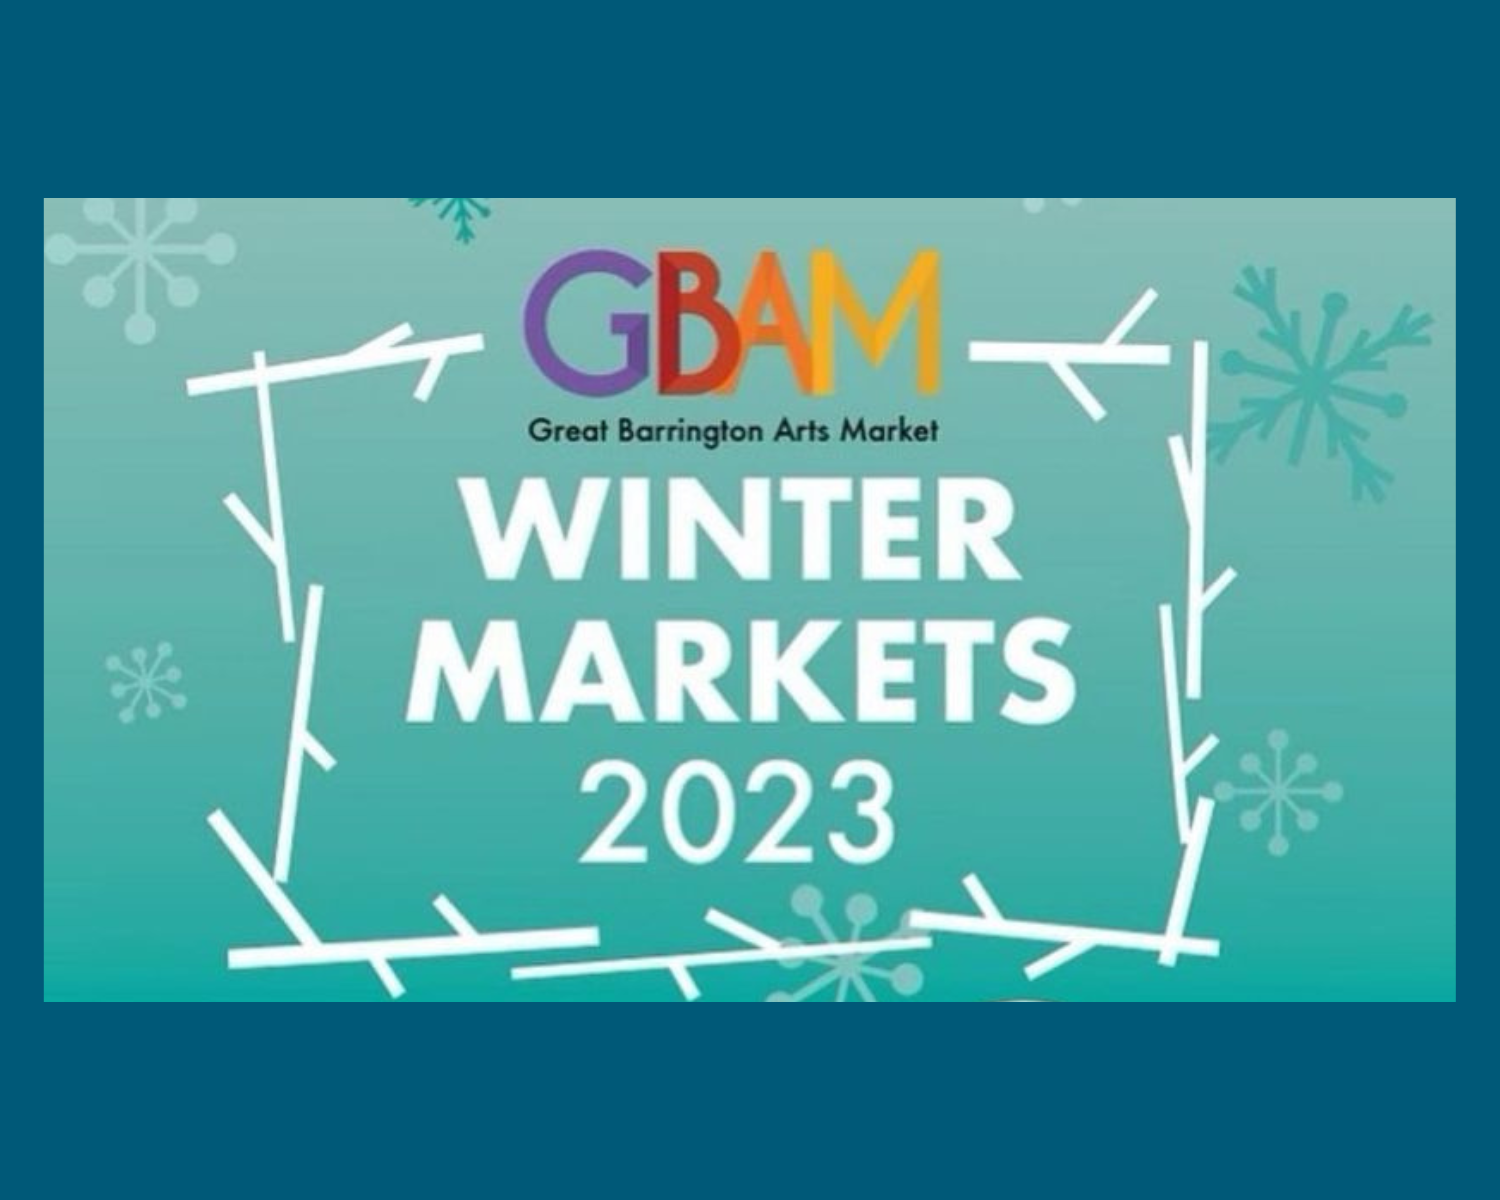 Great Barrington Arts Market (GBAM)